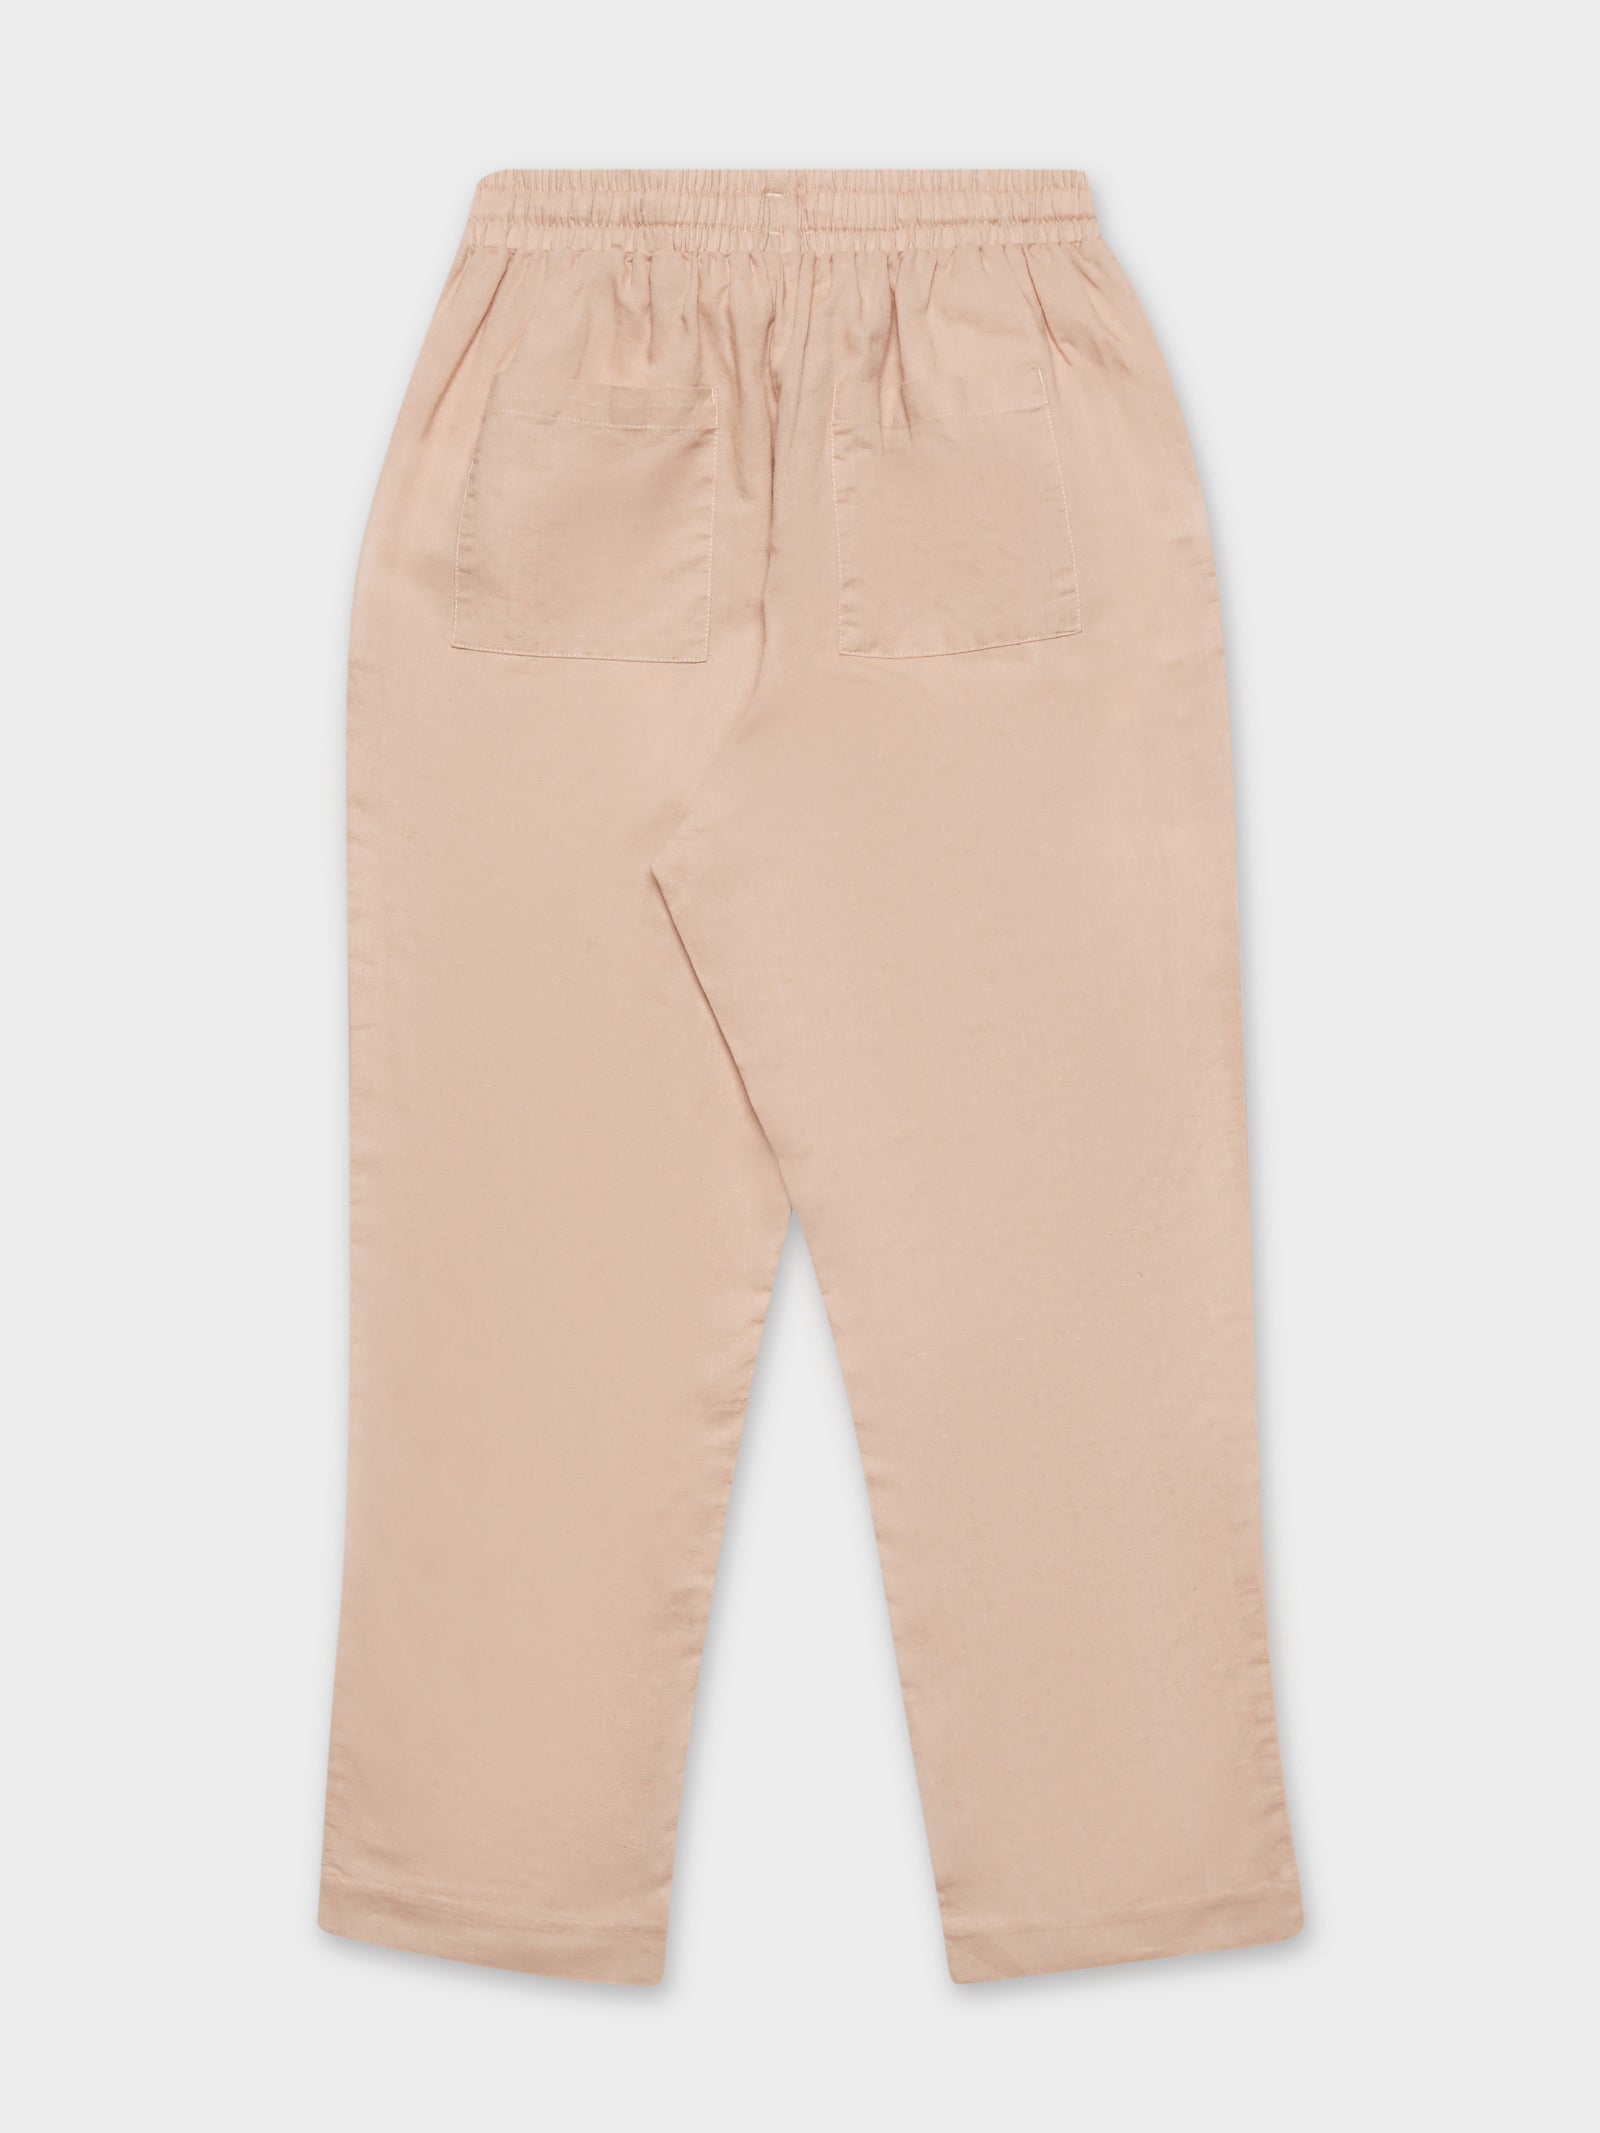 Classic Linen Pants in White Linen